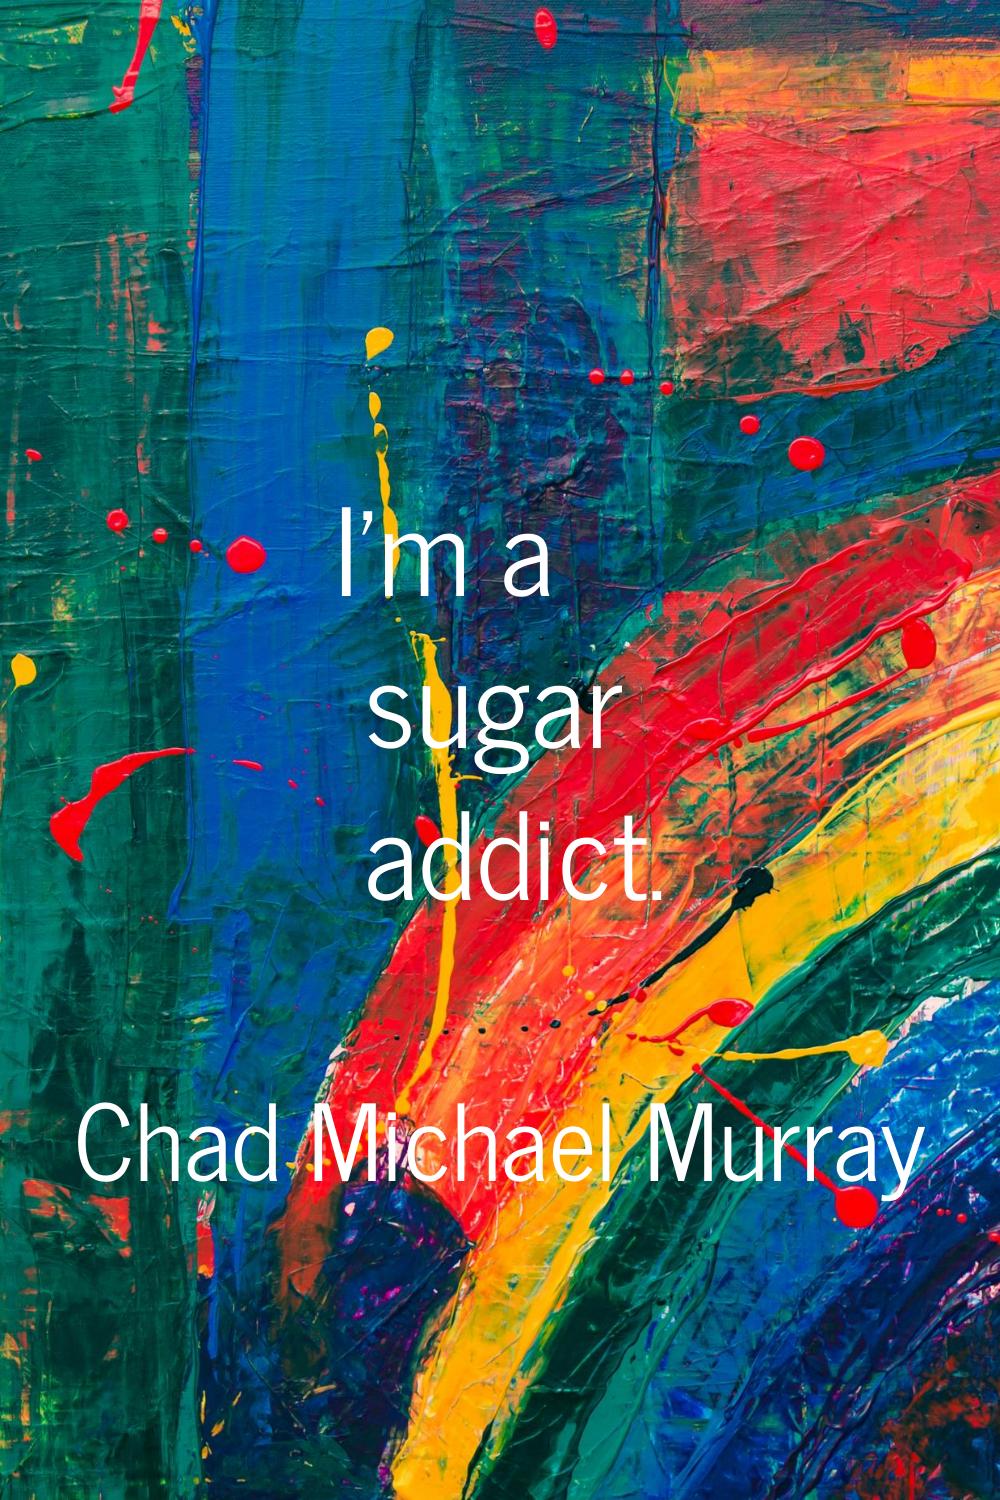 I'm a sugar addict.